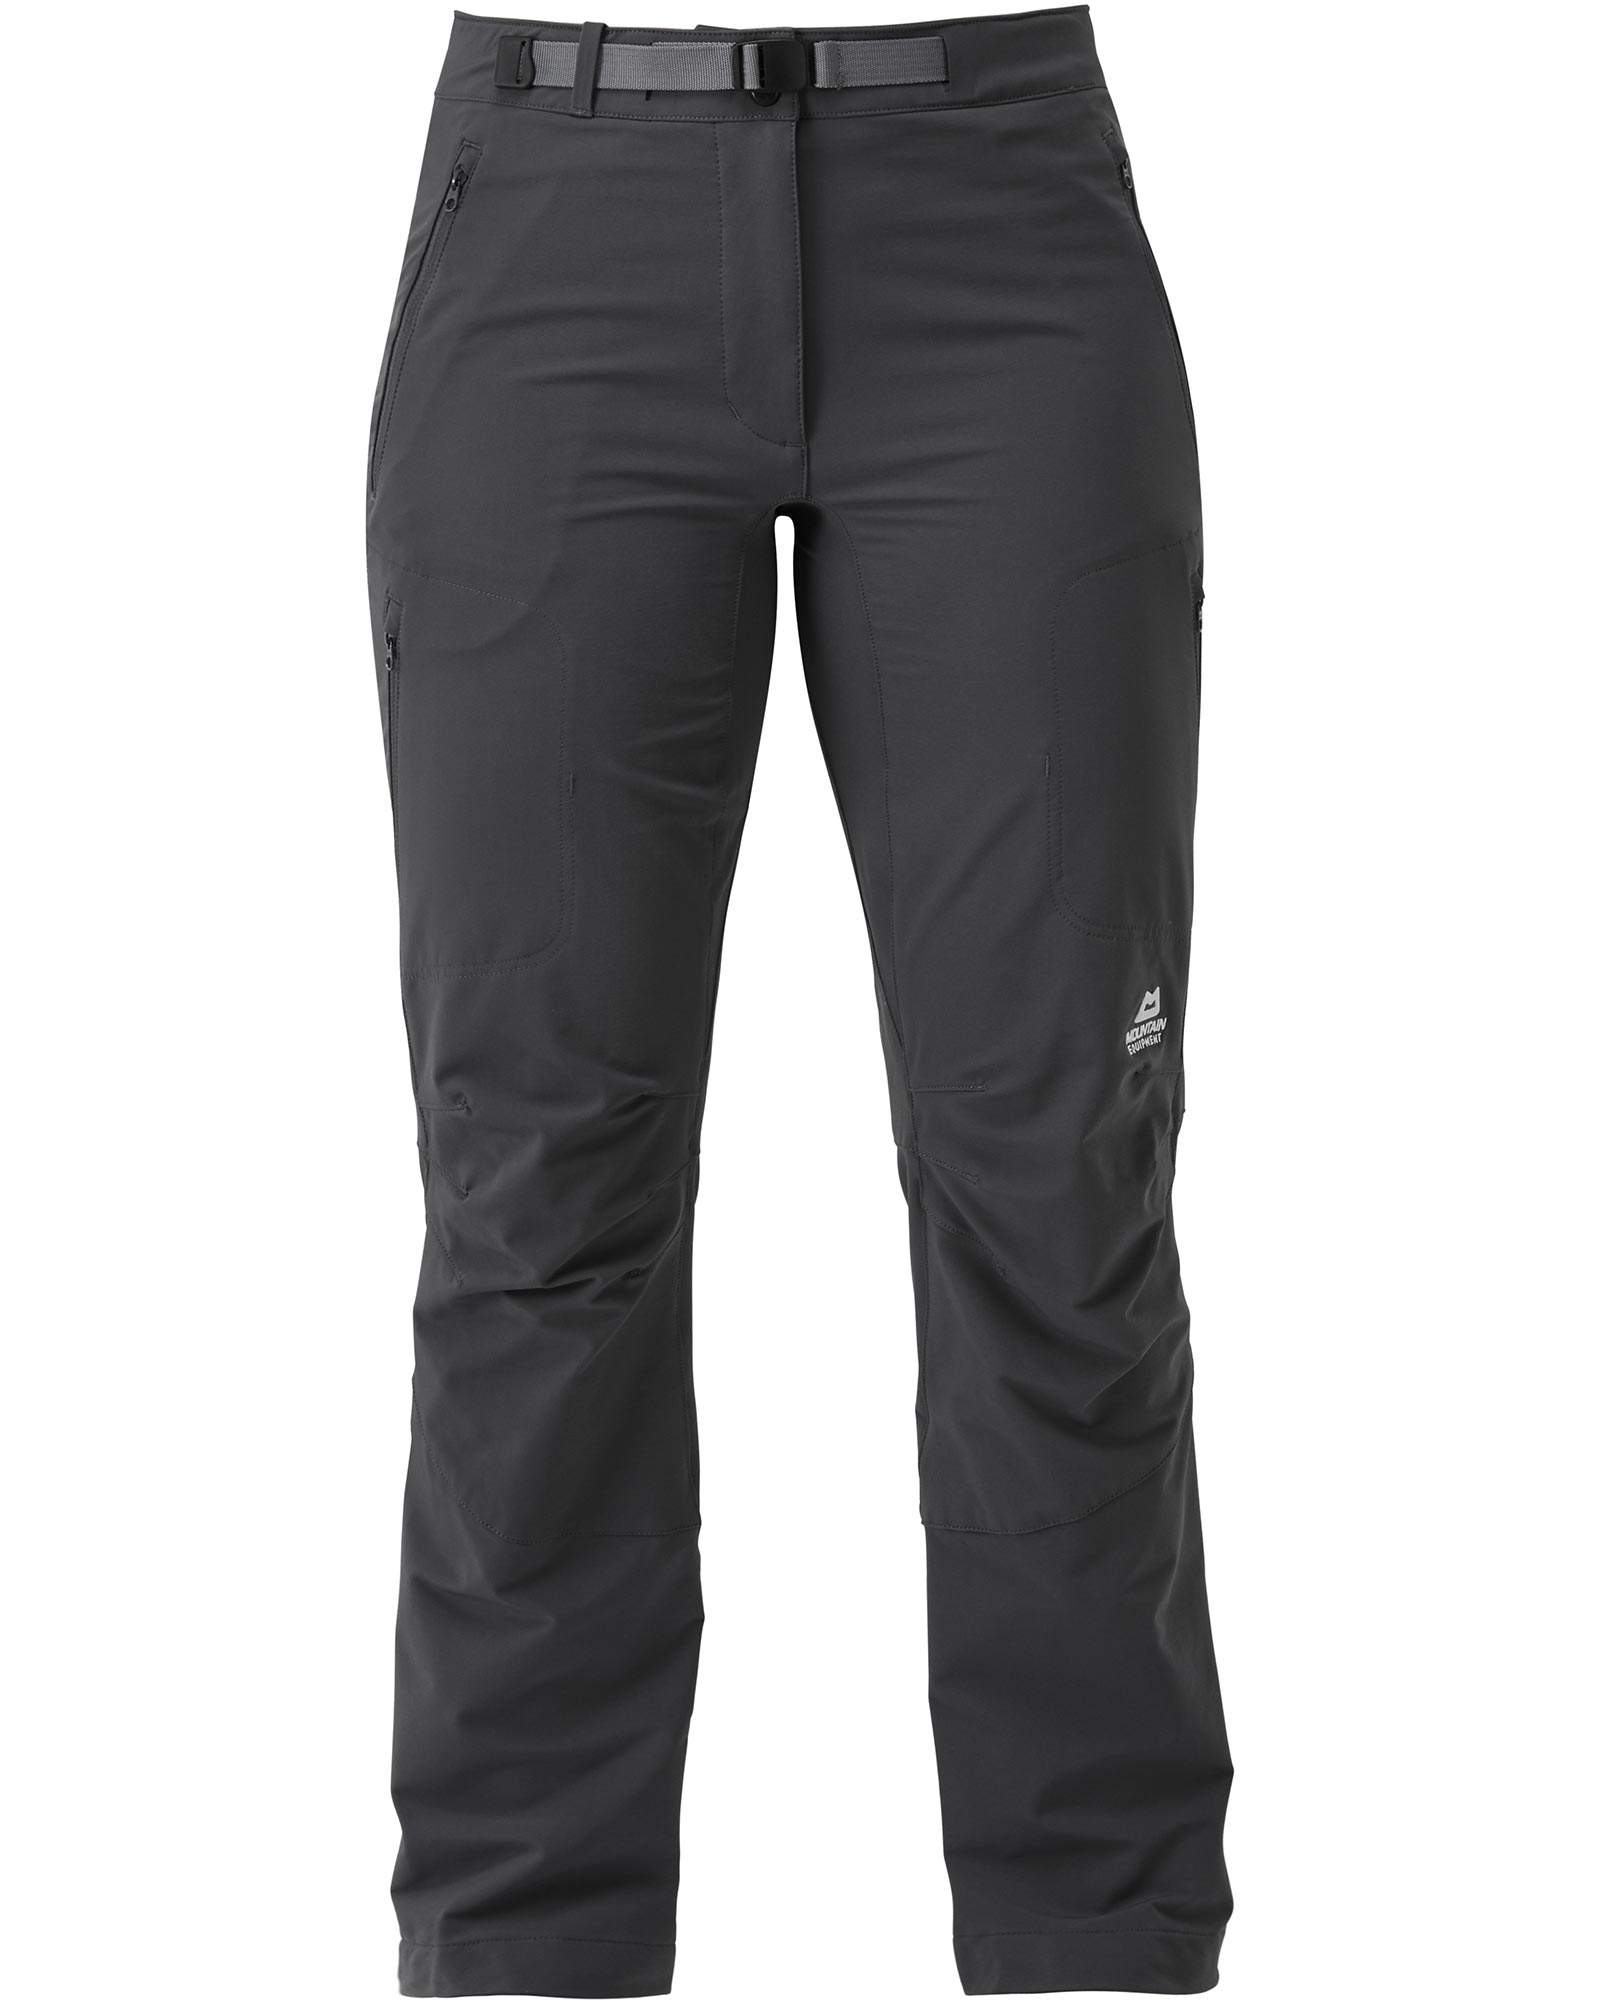 Mountain Equipment Chamois Women’s Pants   Short Leg - Anvil Grey 16